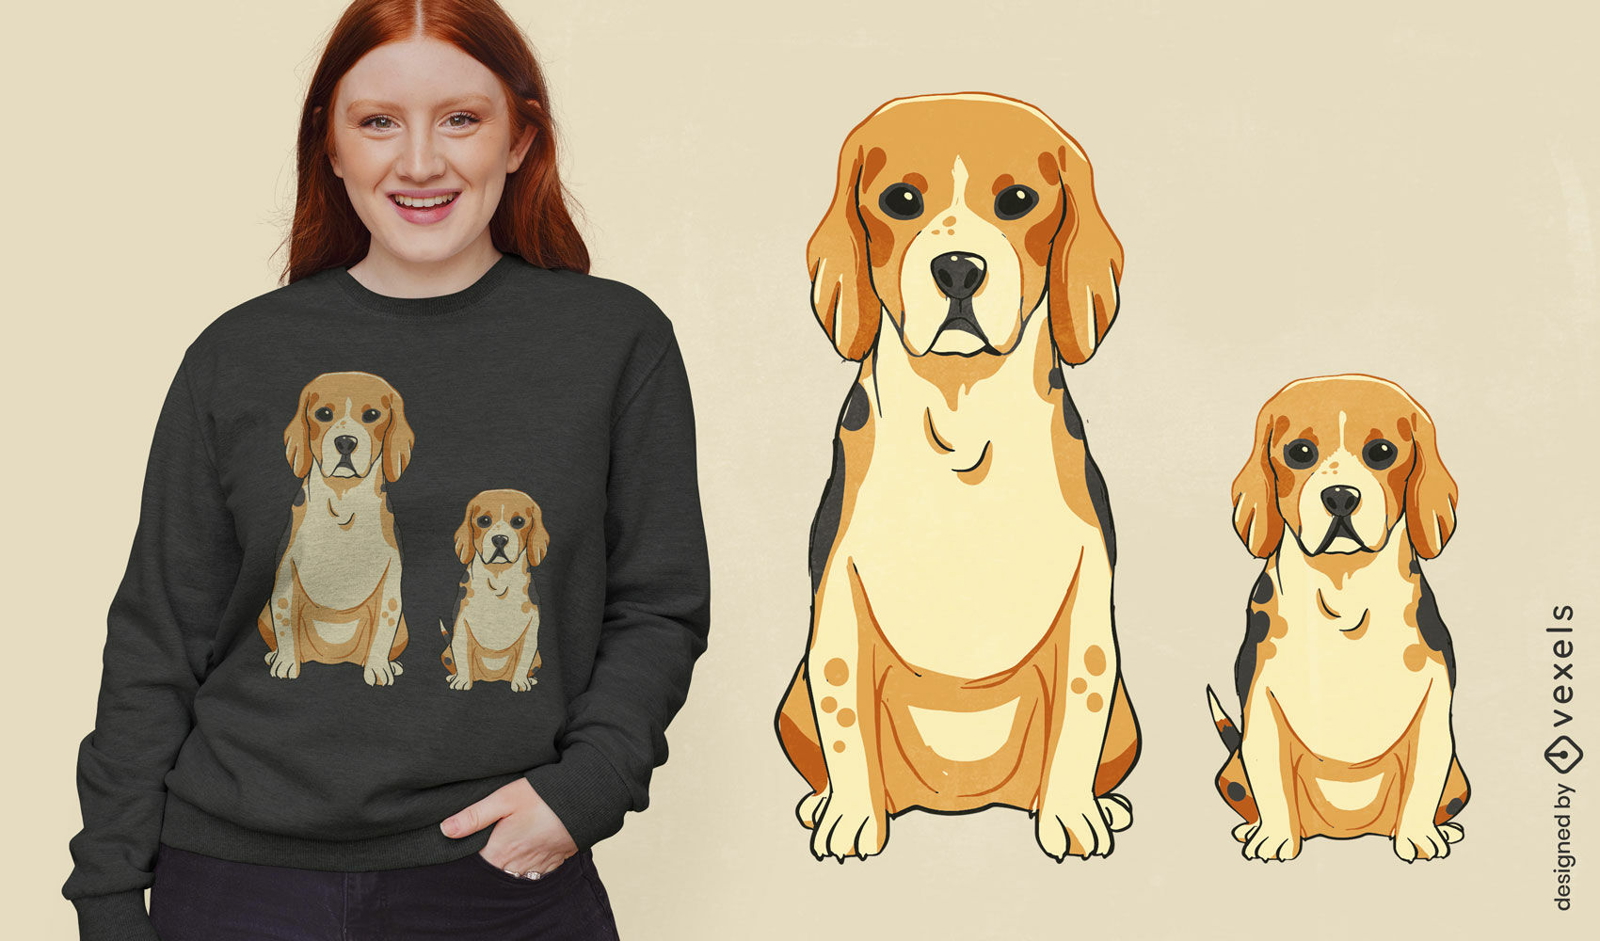 Cute beagle dog puppies t-shirt design